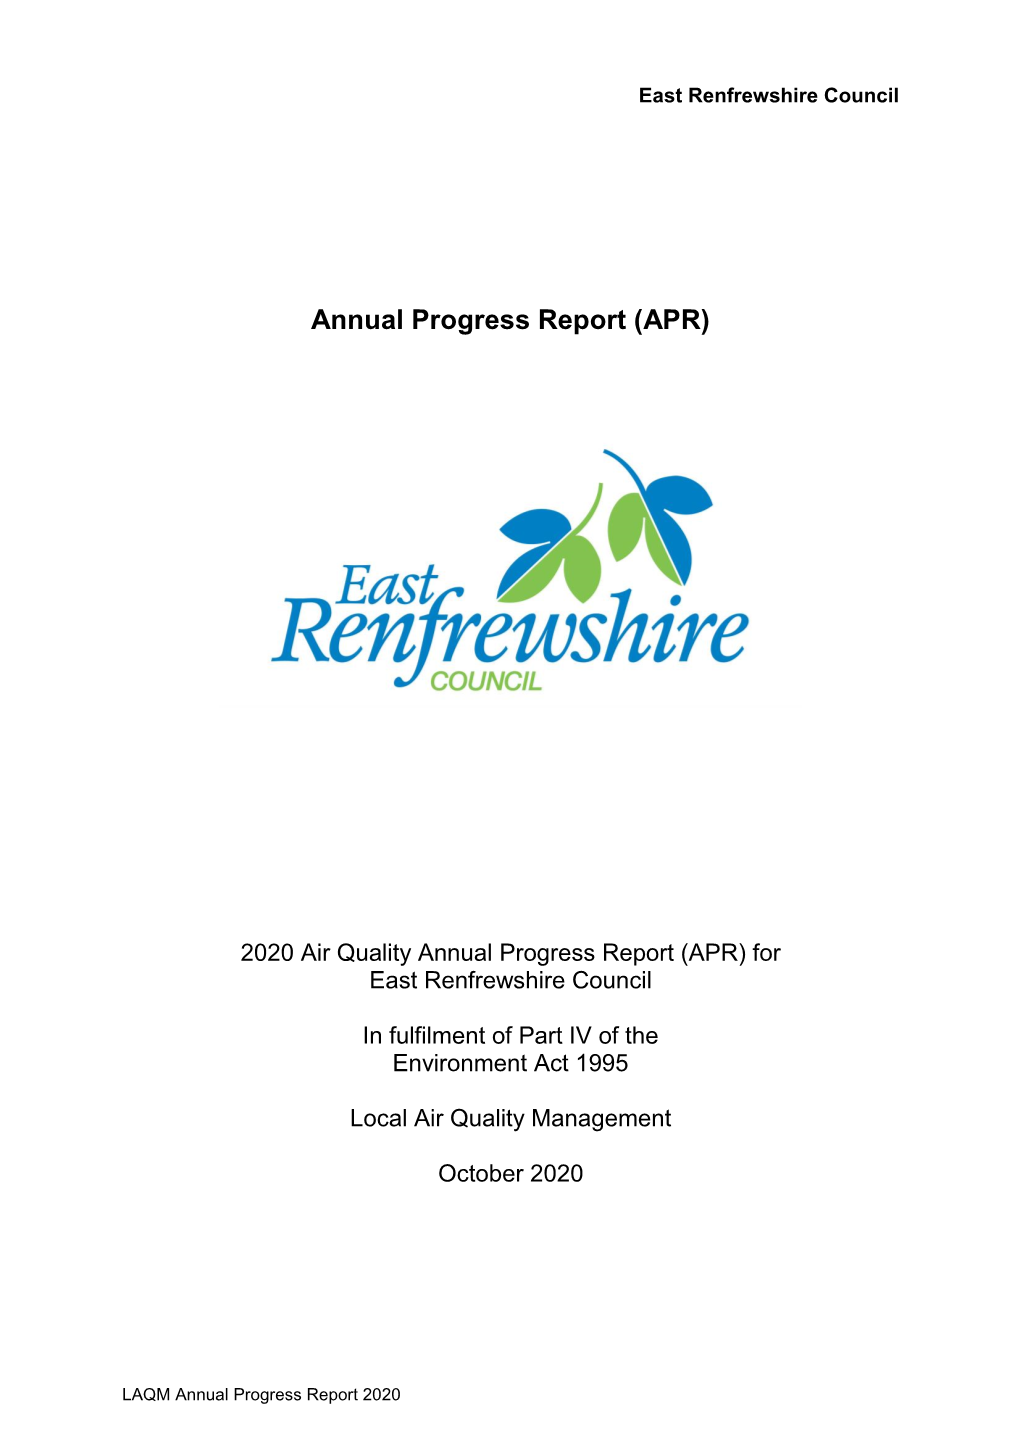 Annual Progress Report 2020 East Renfrewshire Council